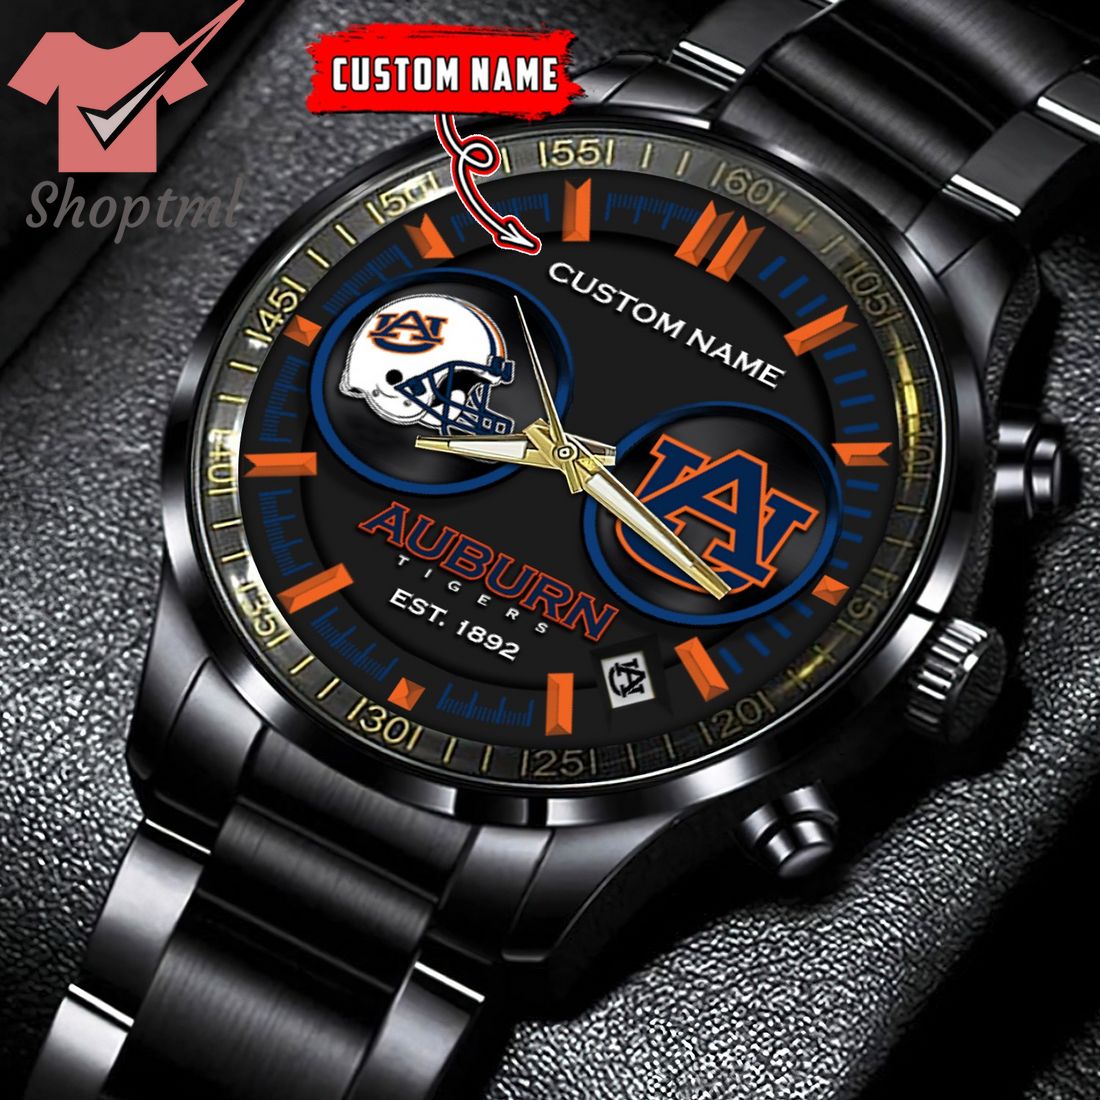 Auburn Tigers est 1892 custom name black stainless steel watch